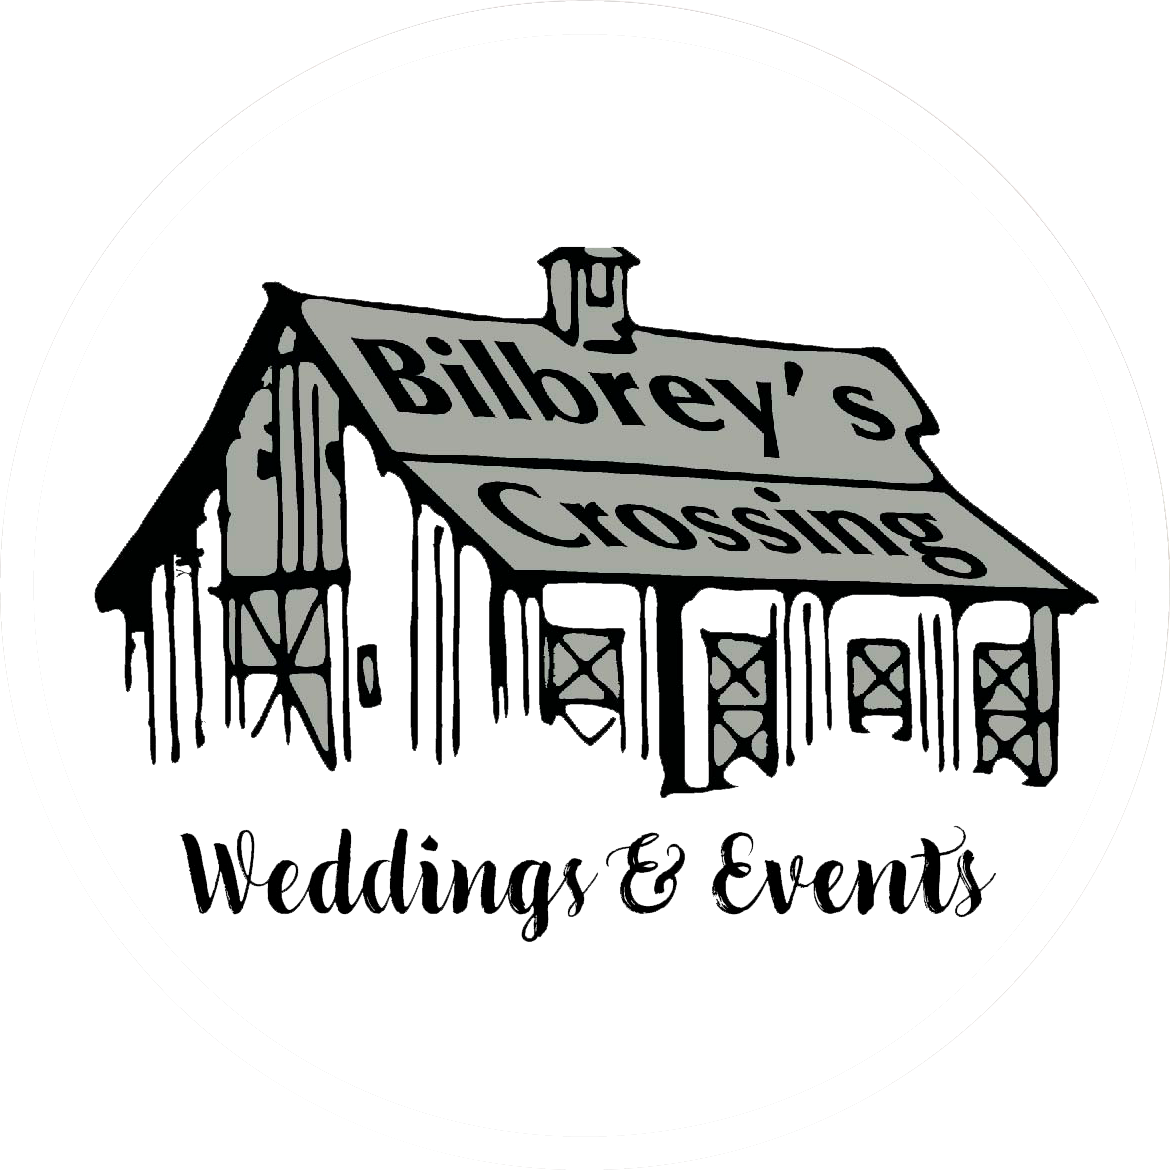 Bilbrey's Crossing